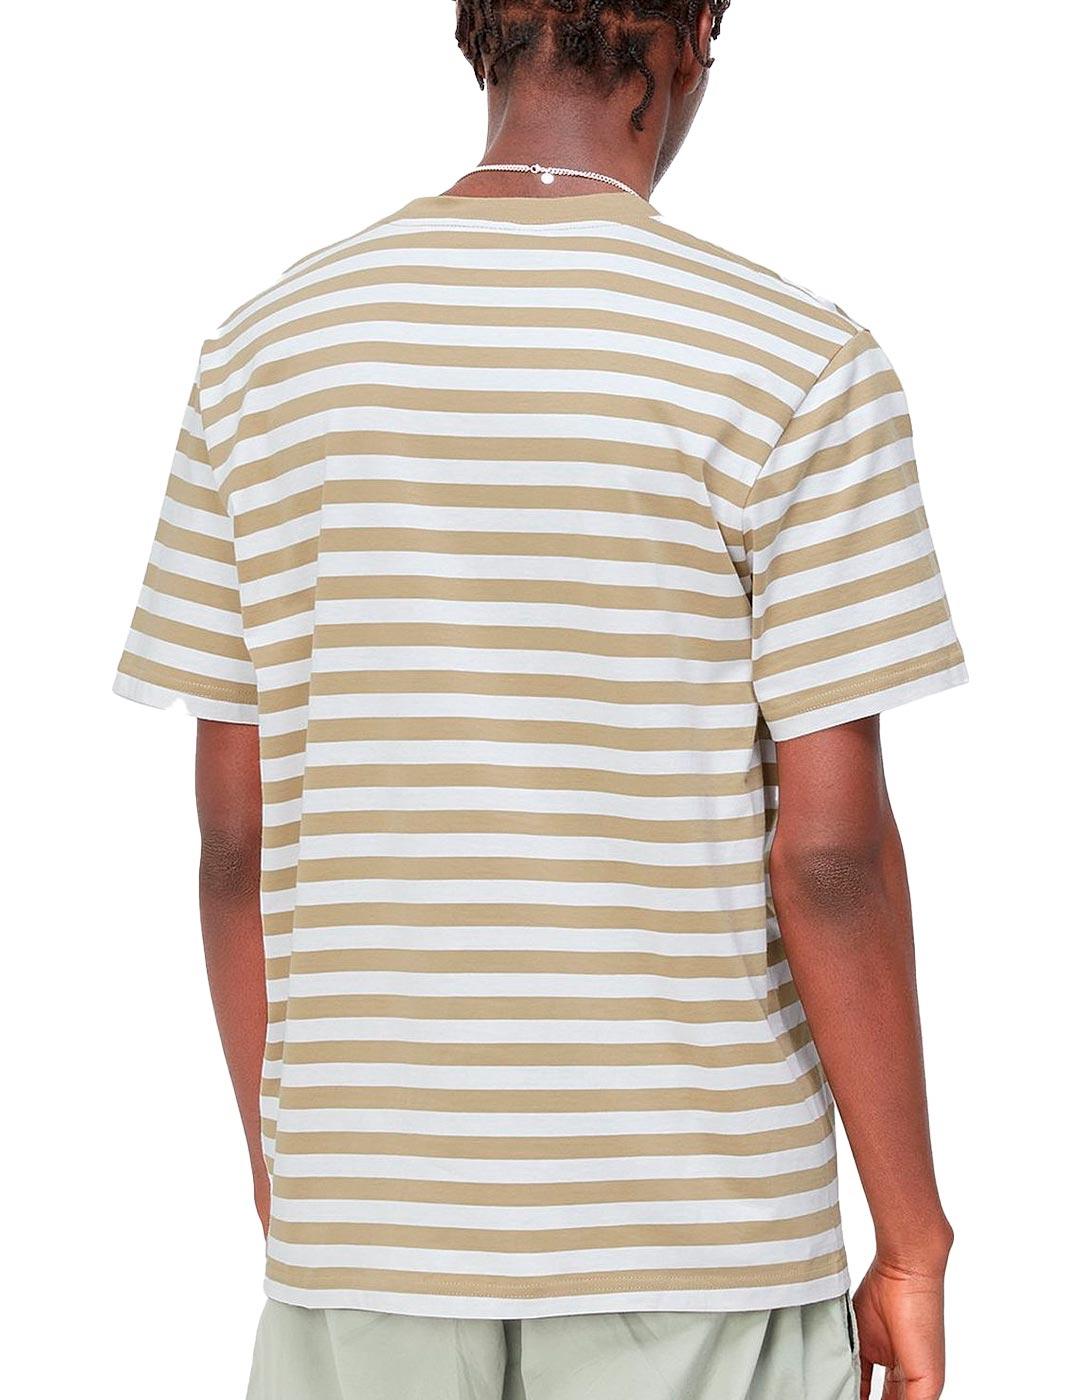 Camiseta Carhartt Scotty Pocket  Marrón / Blanco